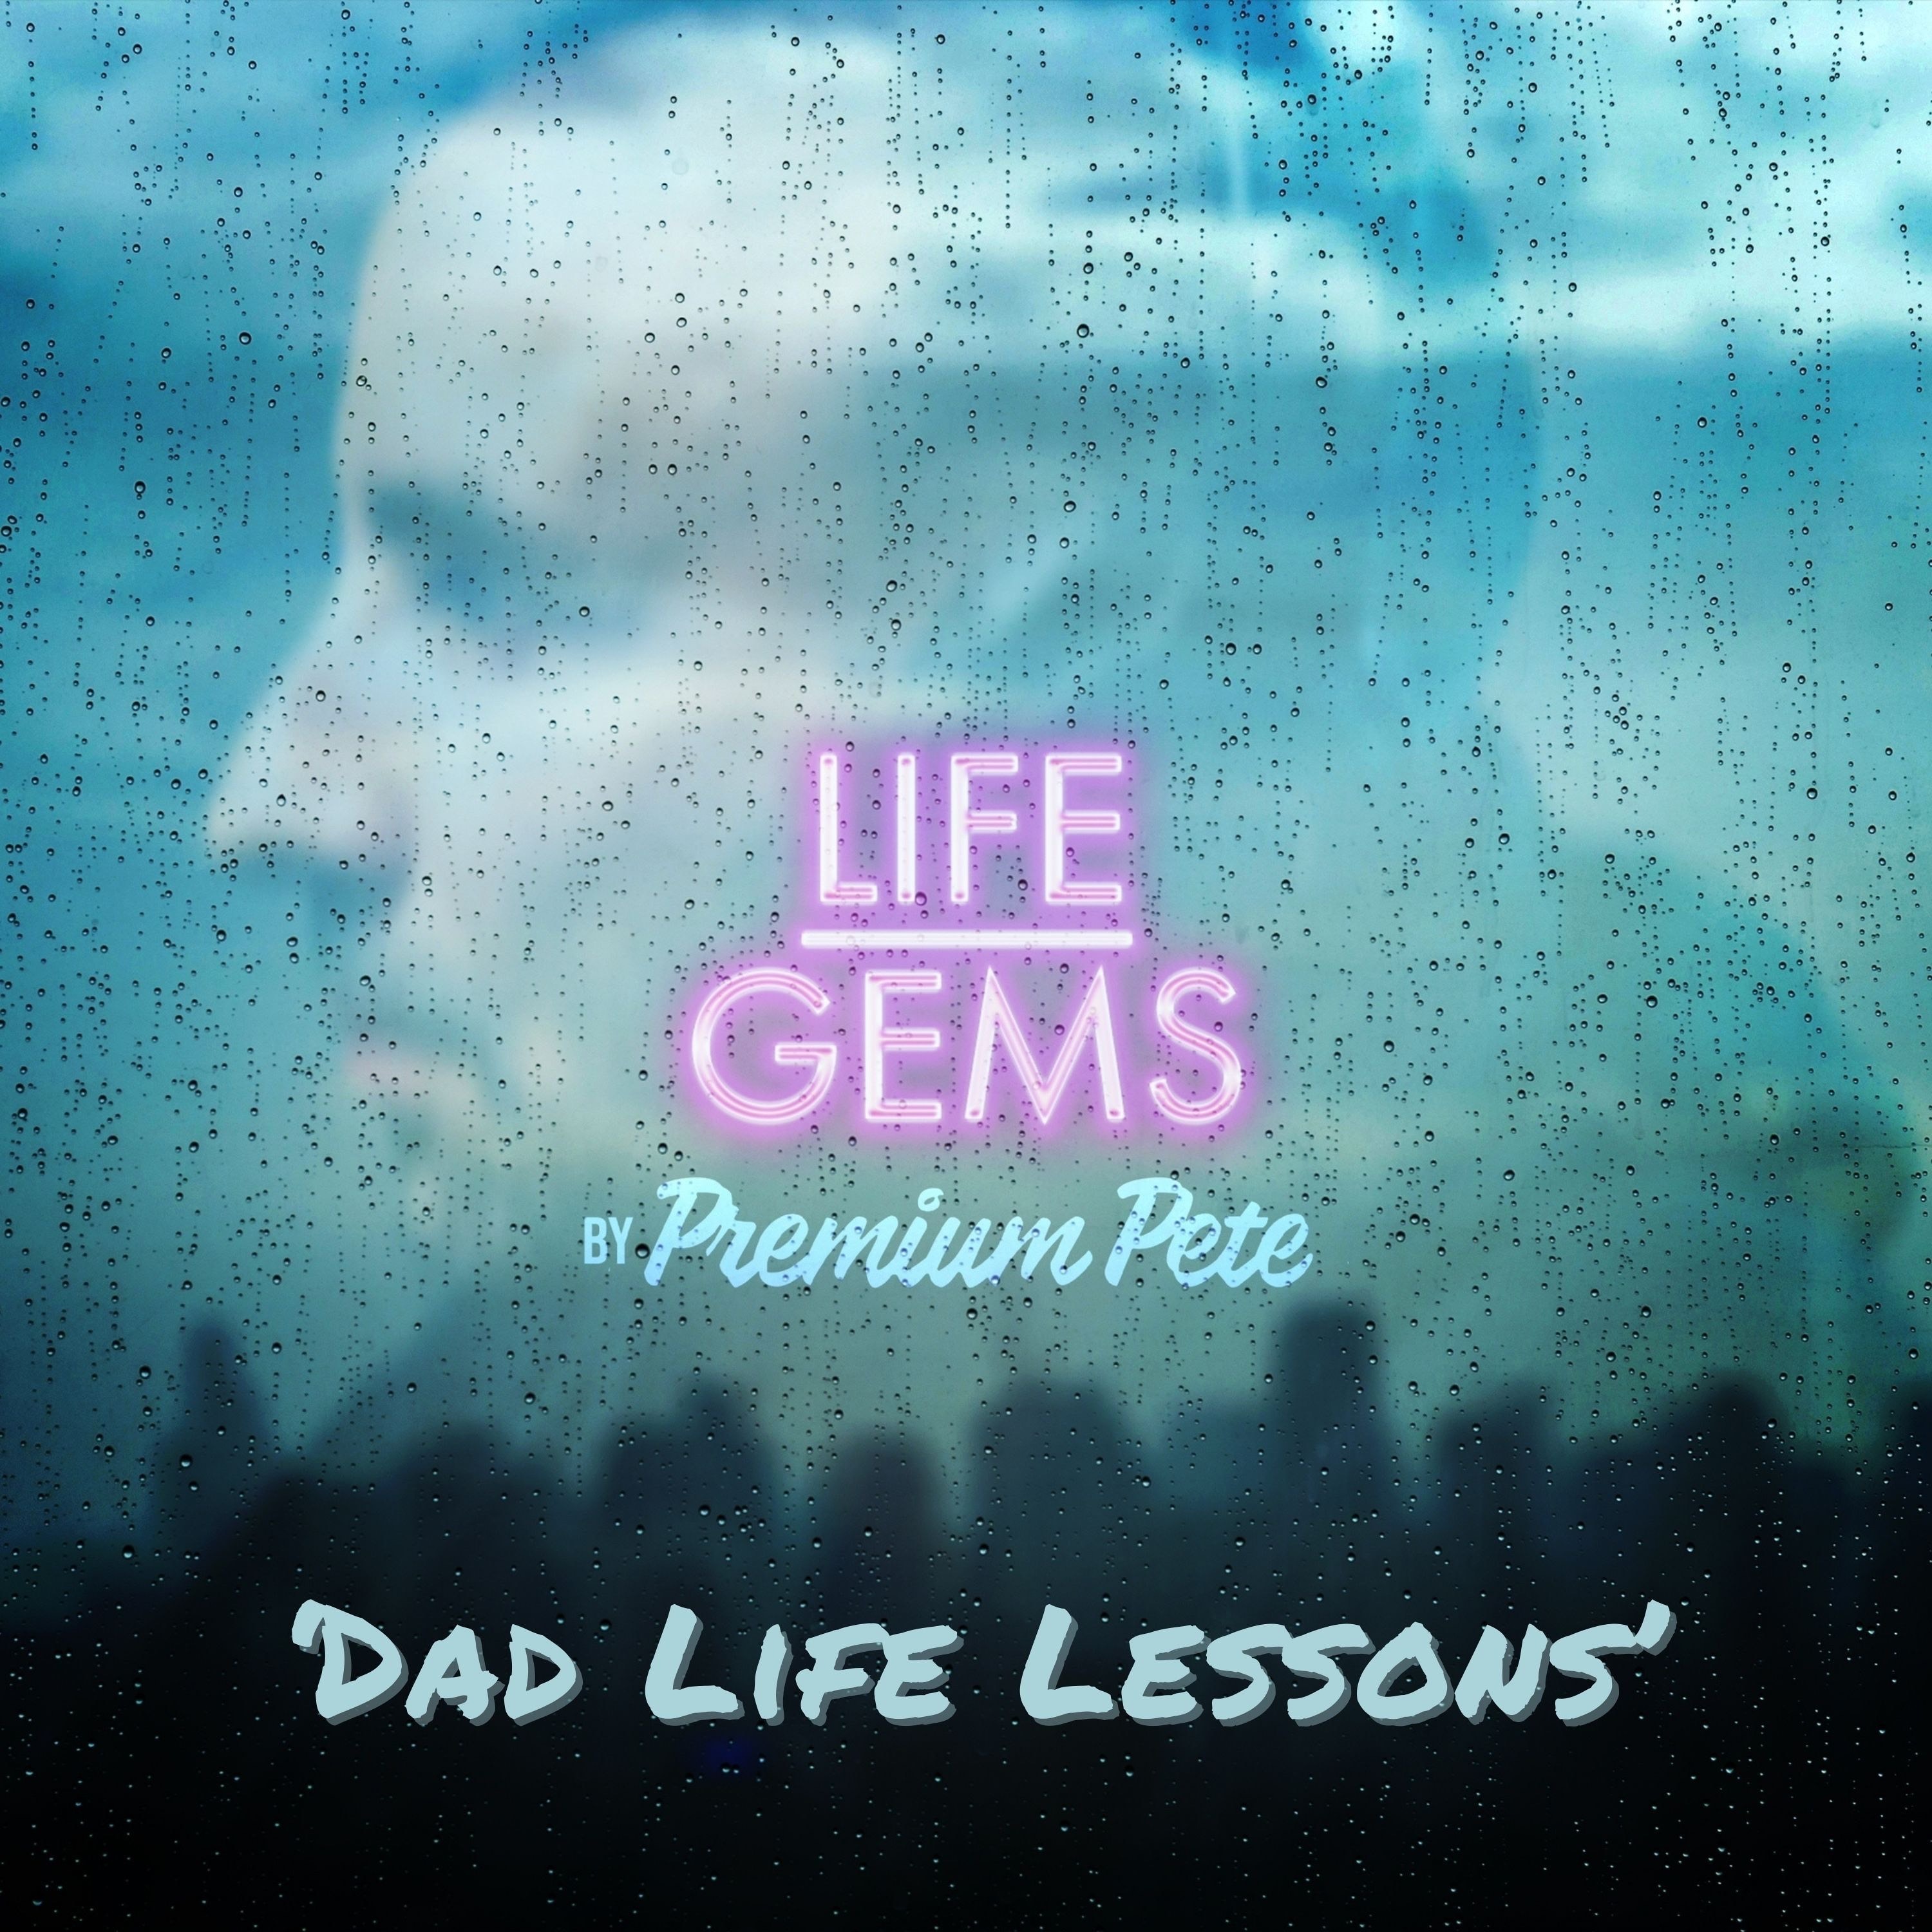 Life Gems ”Dad Life Lessons”